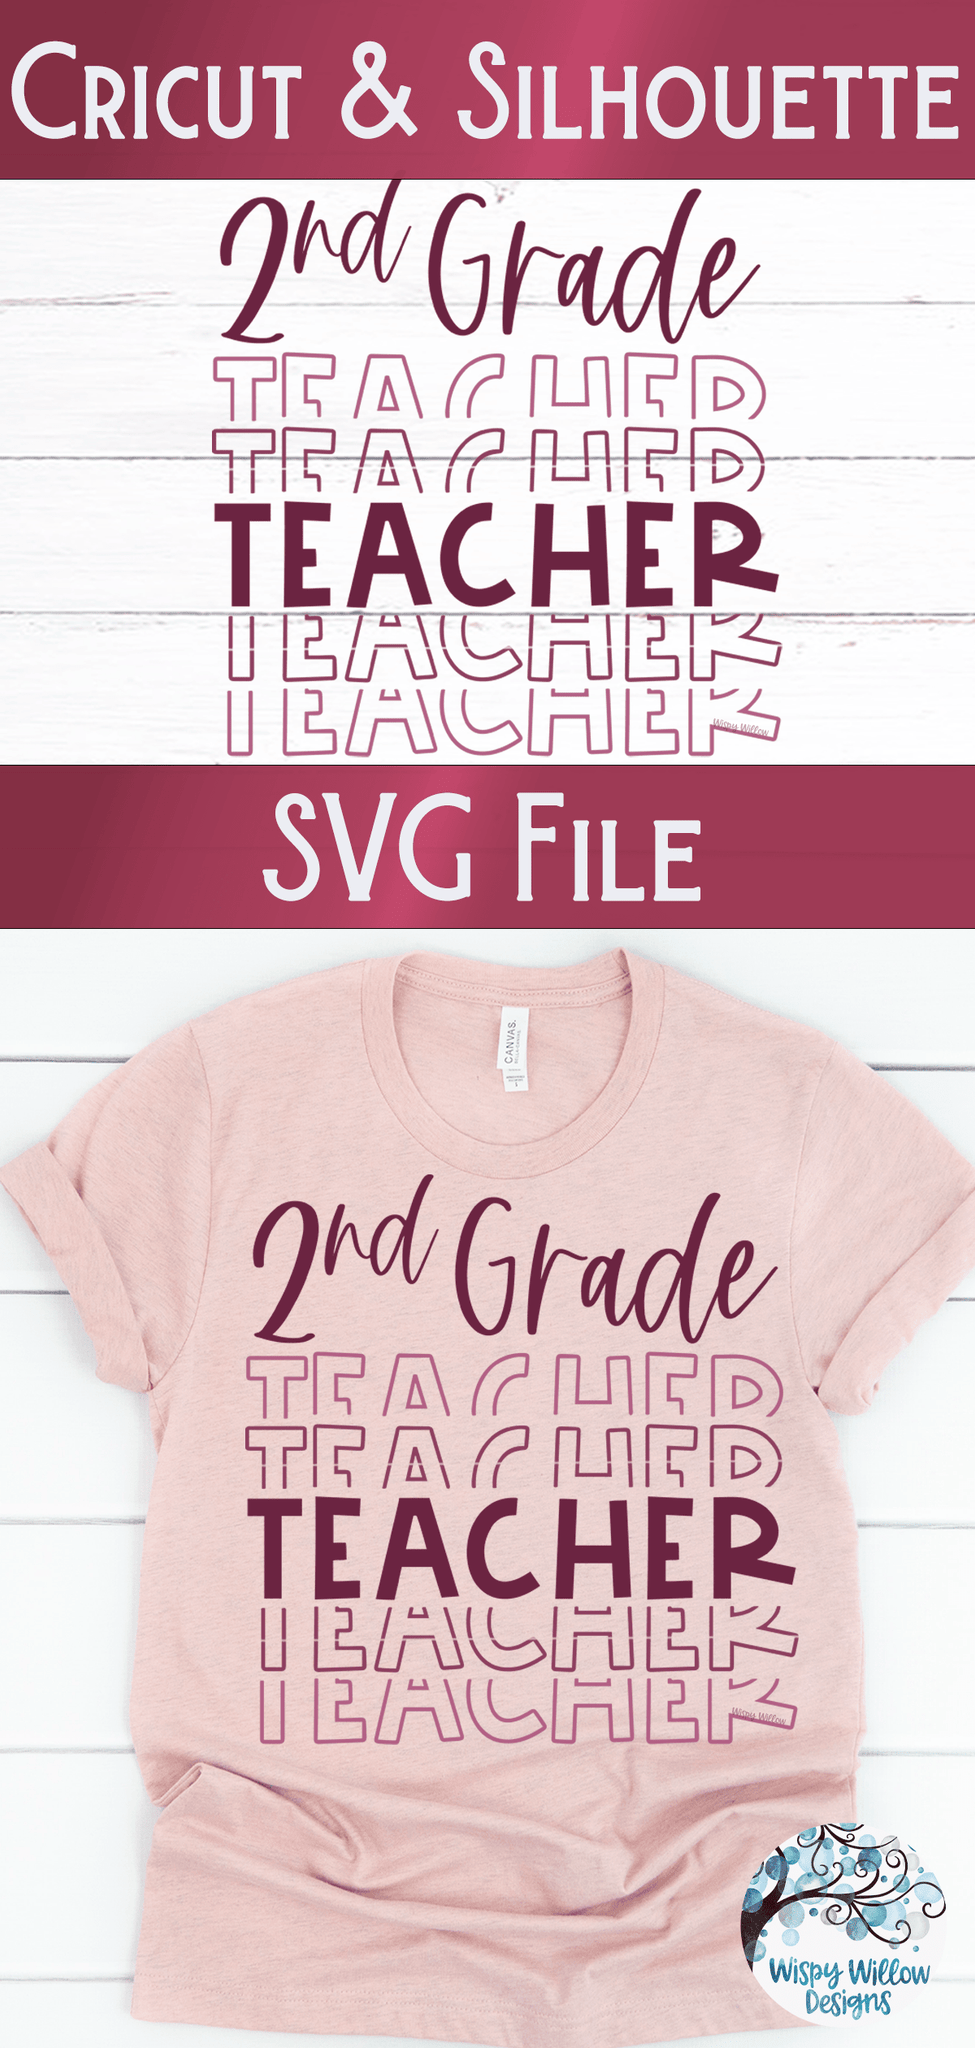 Second Grade Teacher SVG | Teacher Shirt SVG Wispy Willow Designs Company